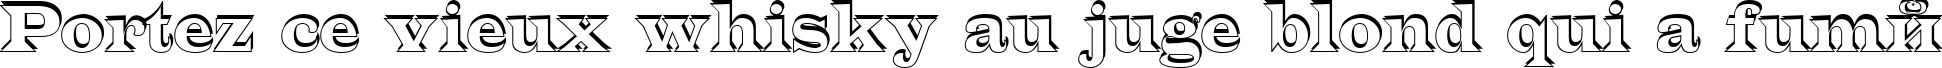 Пример написания шрифтом a_LatinoSh текста на французском